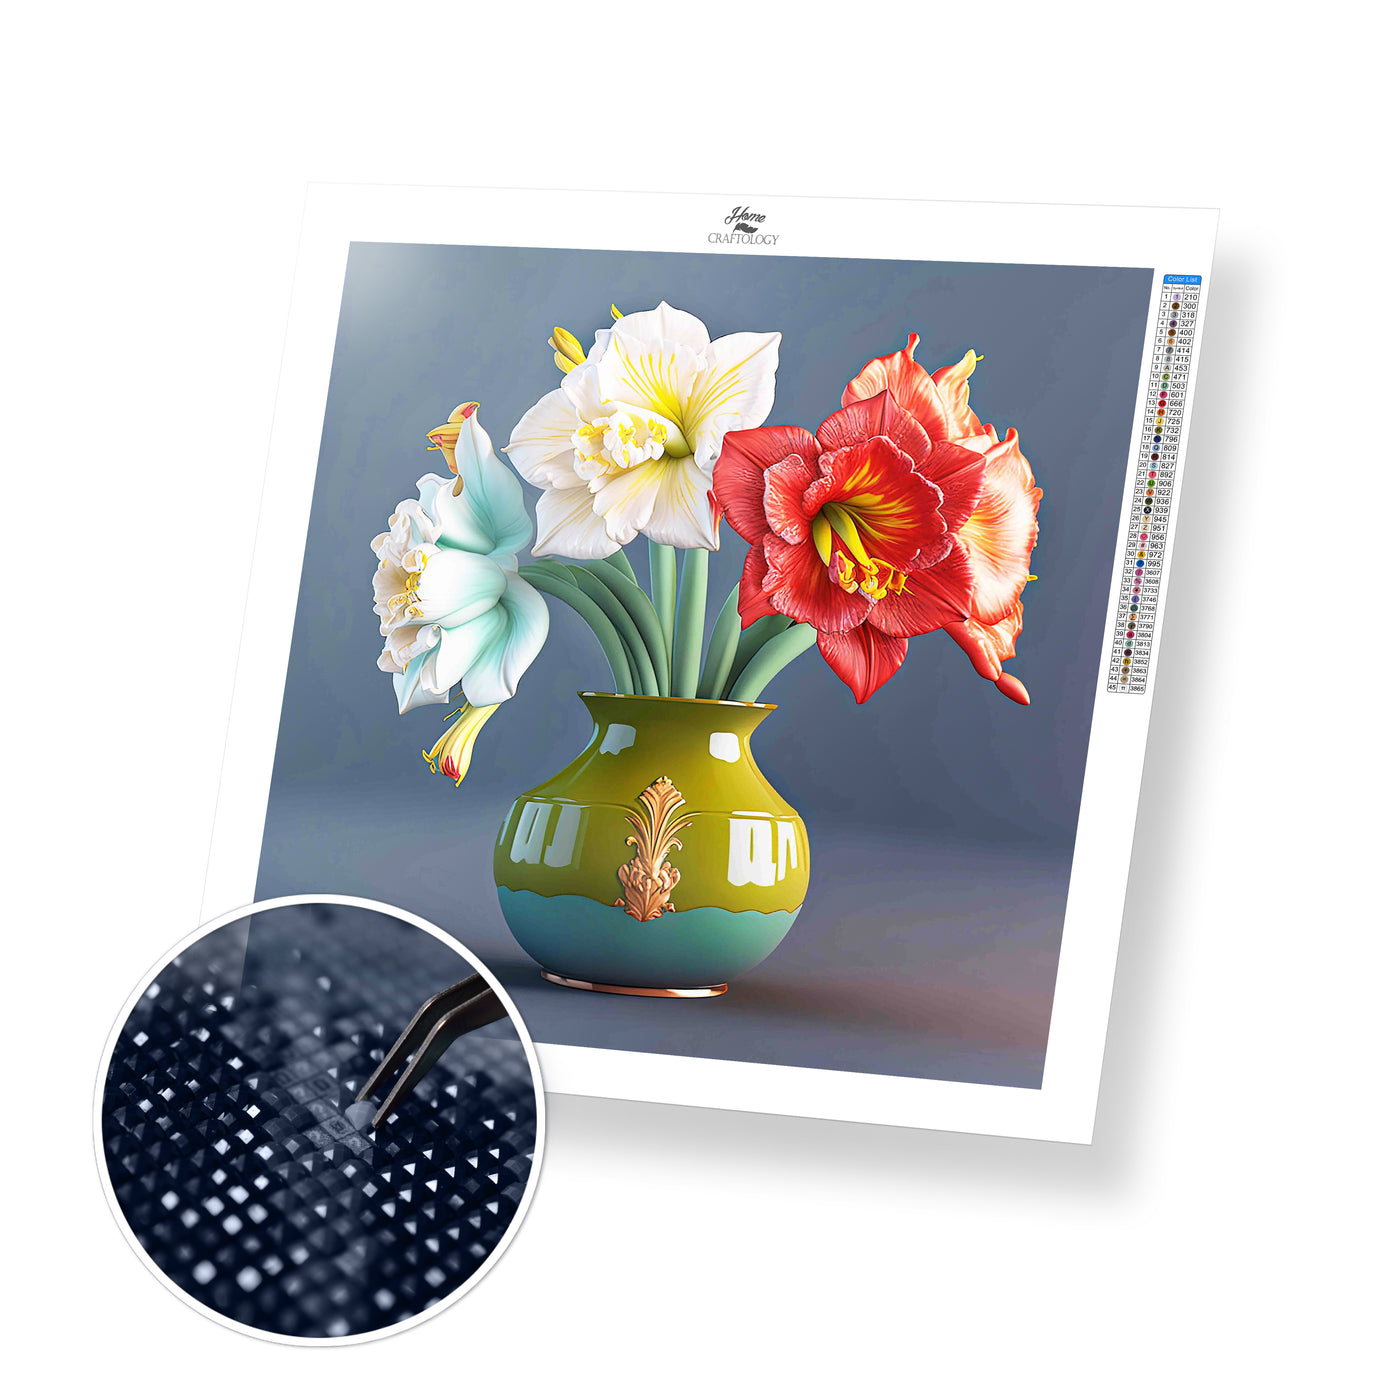 Amaryllis Flowers - Premium Diamond Painting Kit